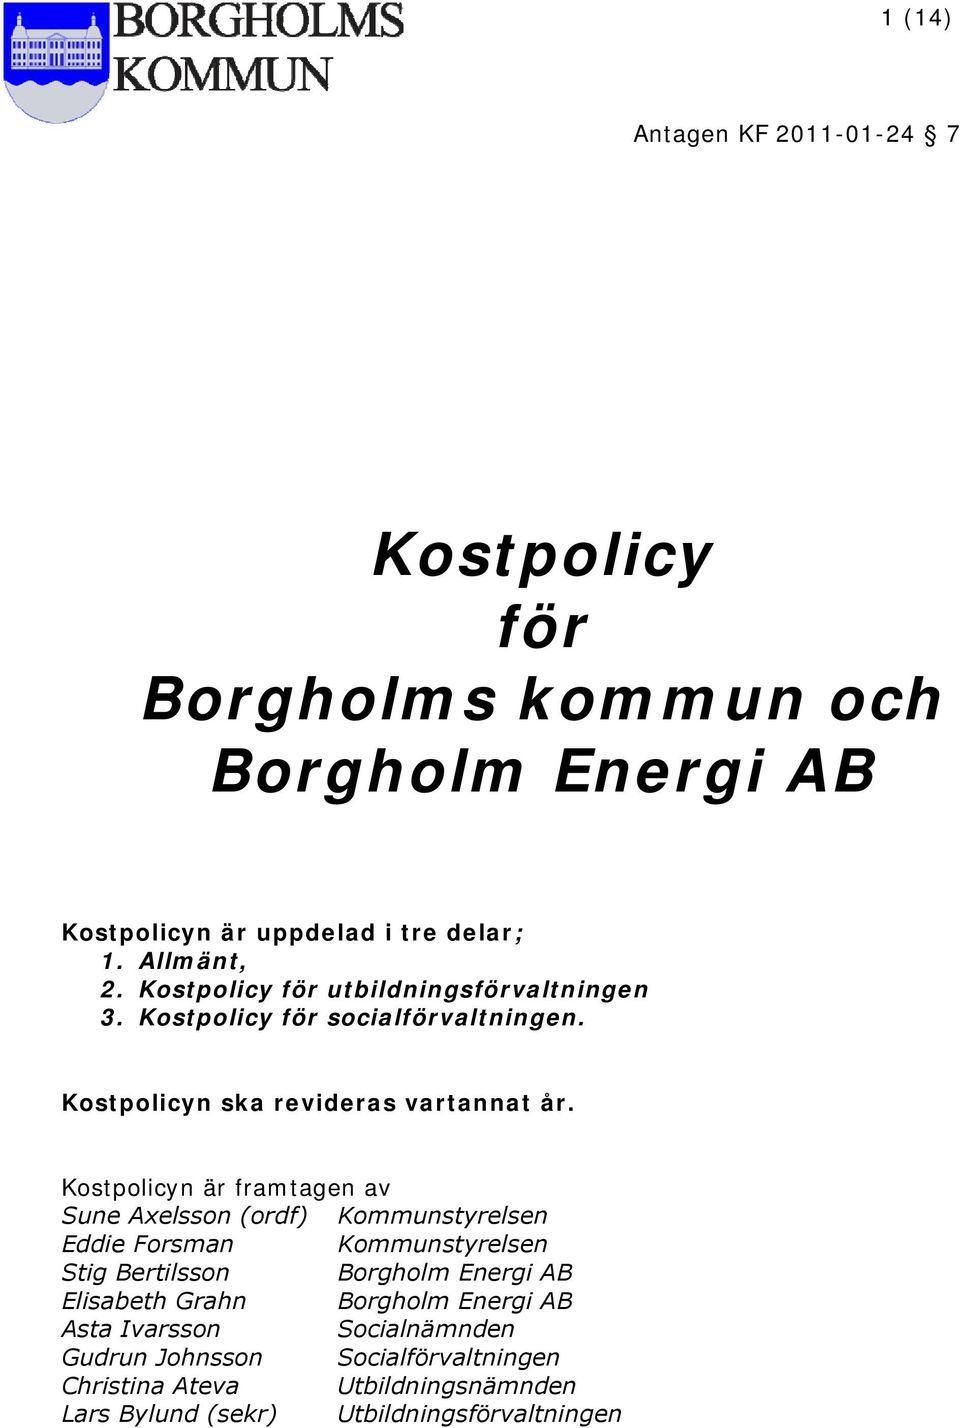 Kostpolicyn är framtagen av Sune Axelsson (ordf) Kommunstyrelsen Eddie Forsman Kommunstyrelsen Stig Bertilsson Borgholm Energi AB Elisabeth